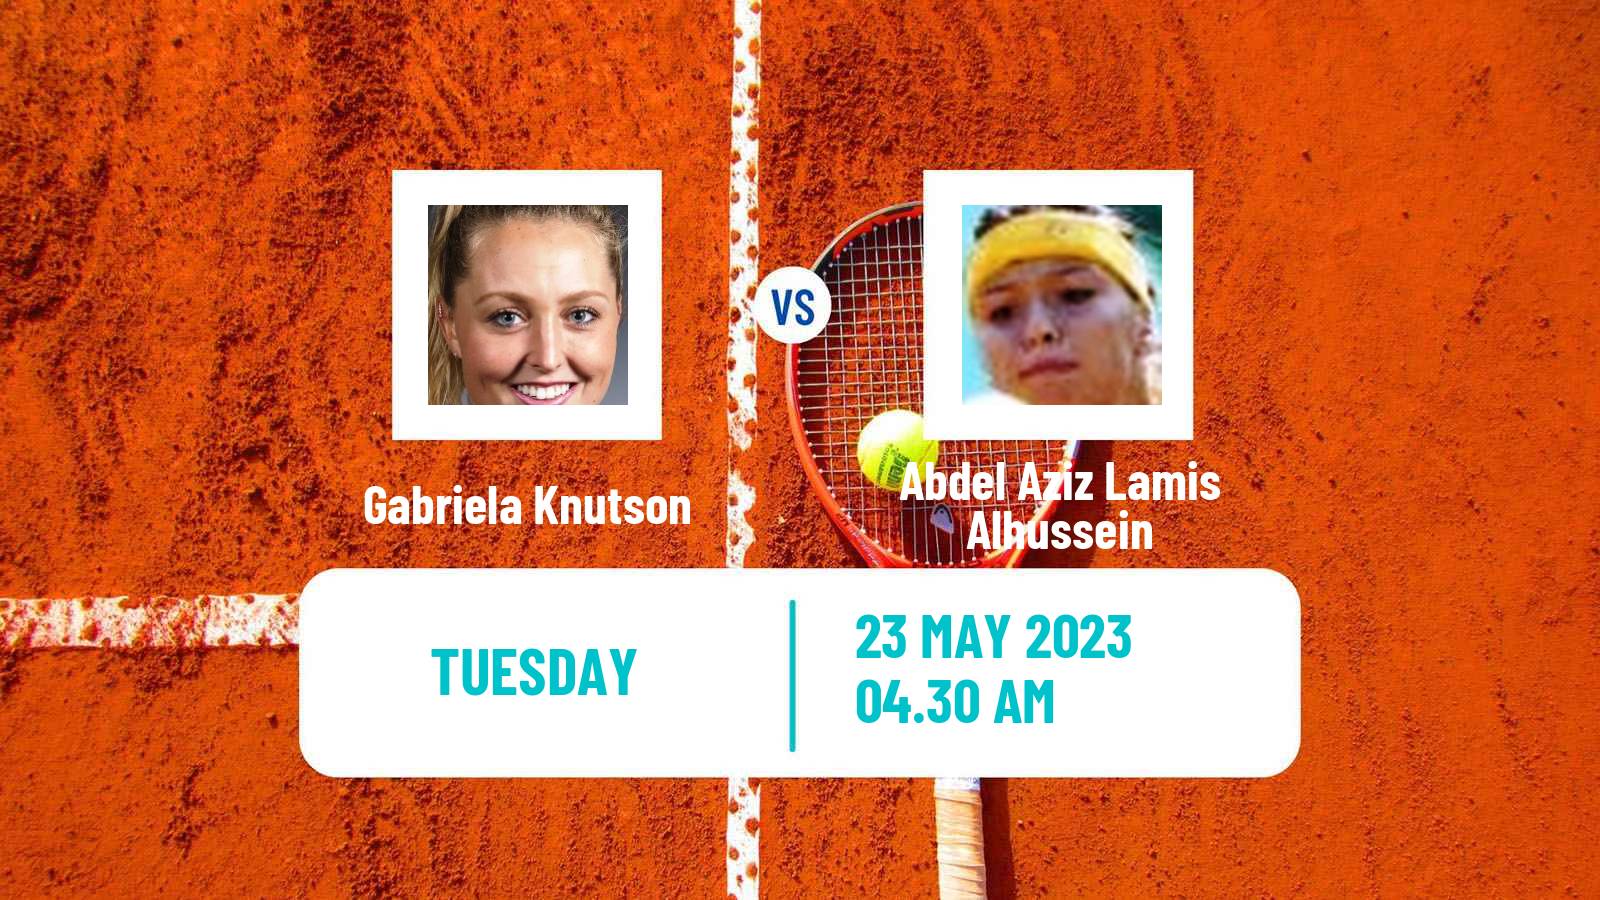 Tennis ITF W25 Monastir 10 Women Gabriela Knutson - Abdel Aziz Lamis Alhussein